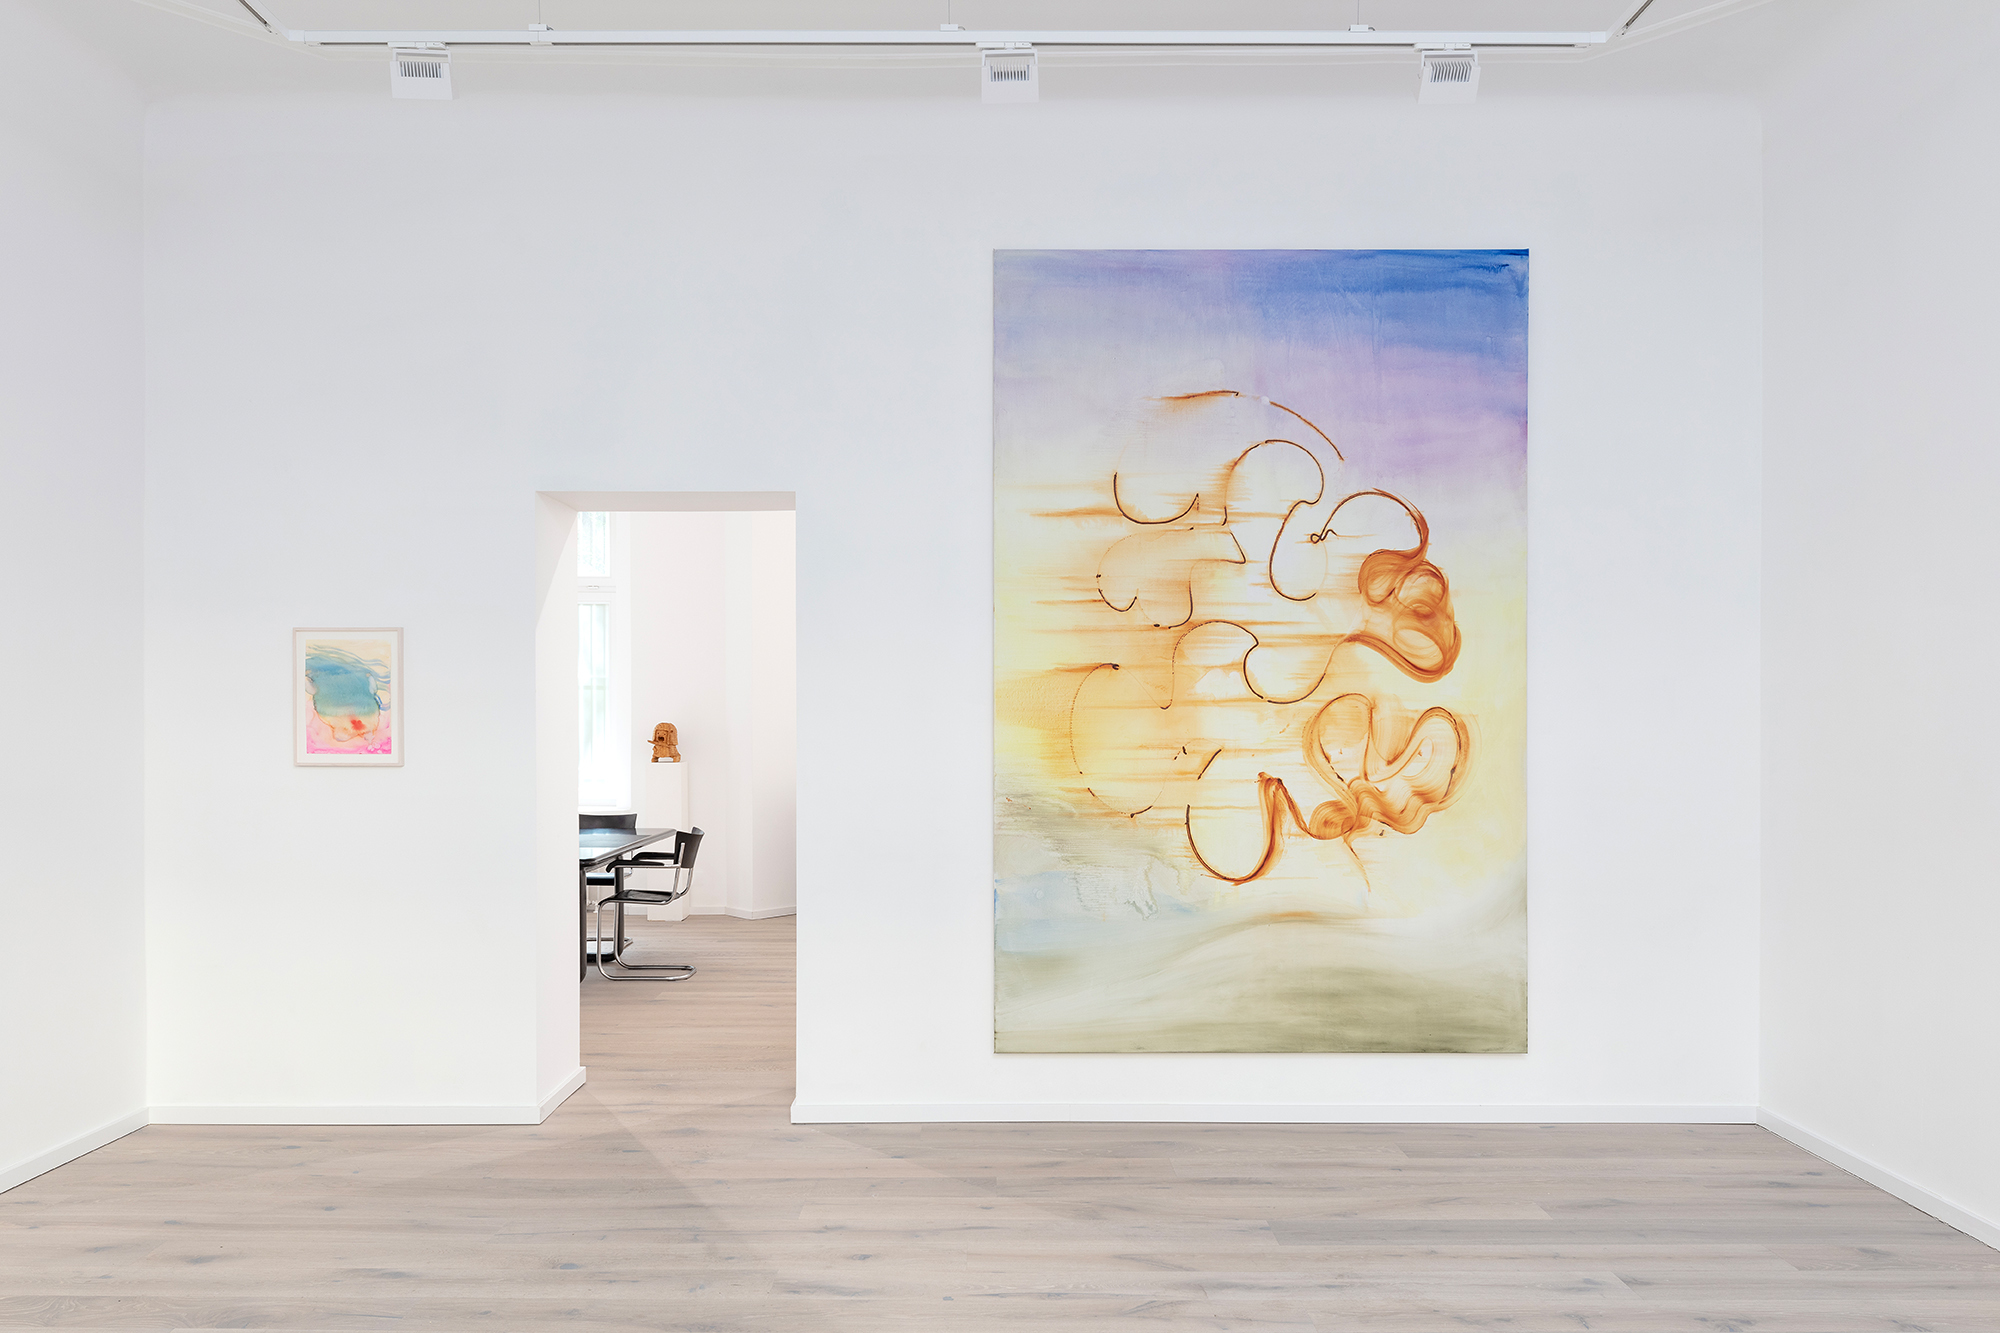 aufgelöst, Installation view, left: Meermensch, 2023, watercolor on paper, 40 x 29 cm, right: Fata Morgana, 2023, oil on canvas, 280 x 190 cm